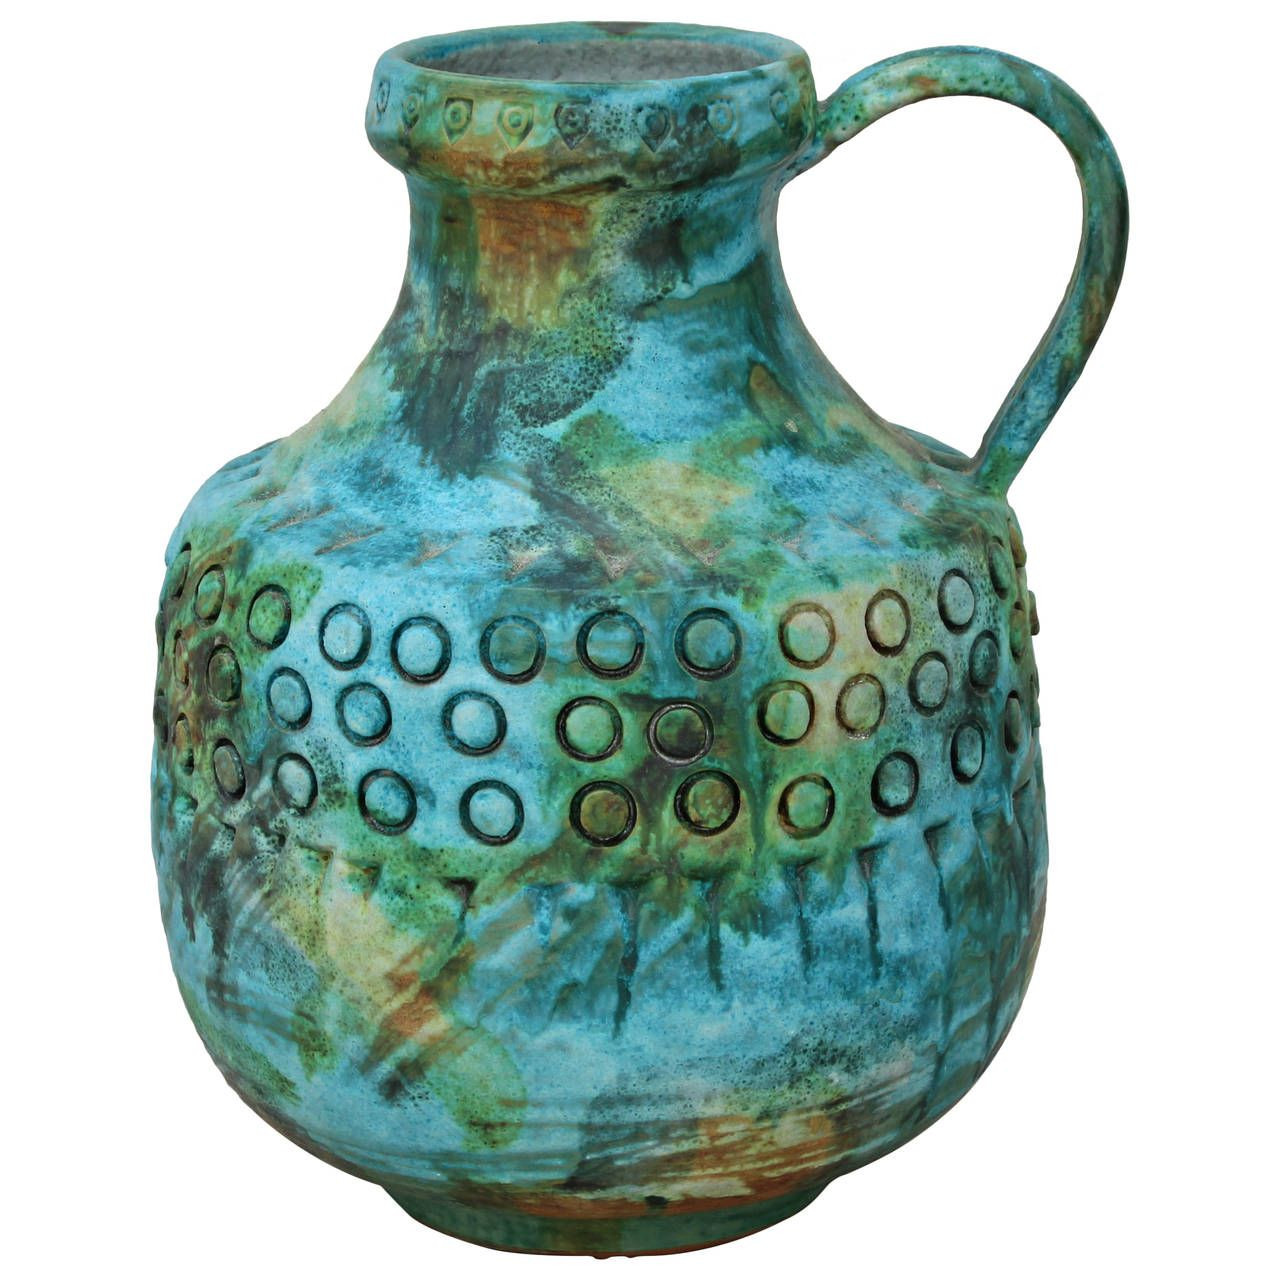 Weller Pottery Vase Of Weller Pottery Coppertone Handled Vase within Vintage Bagni Italian Art Pottery Jug In Sea Garden Glaze